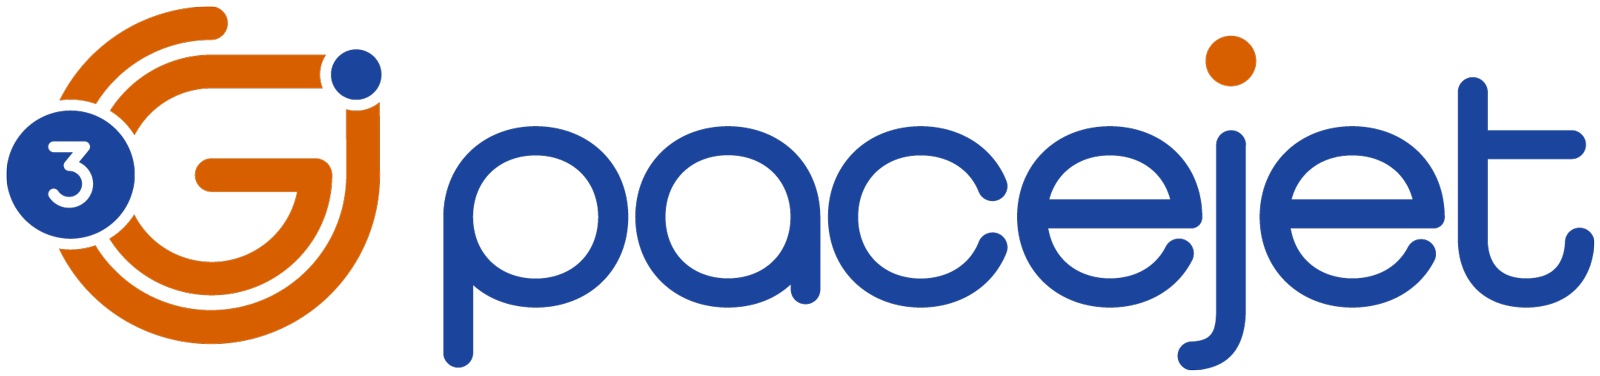 Pacejet-Logo-Full-Color-RGB